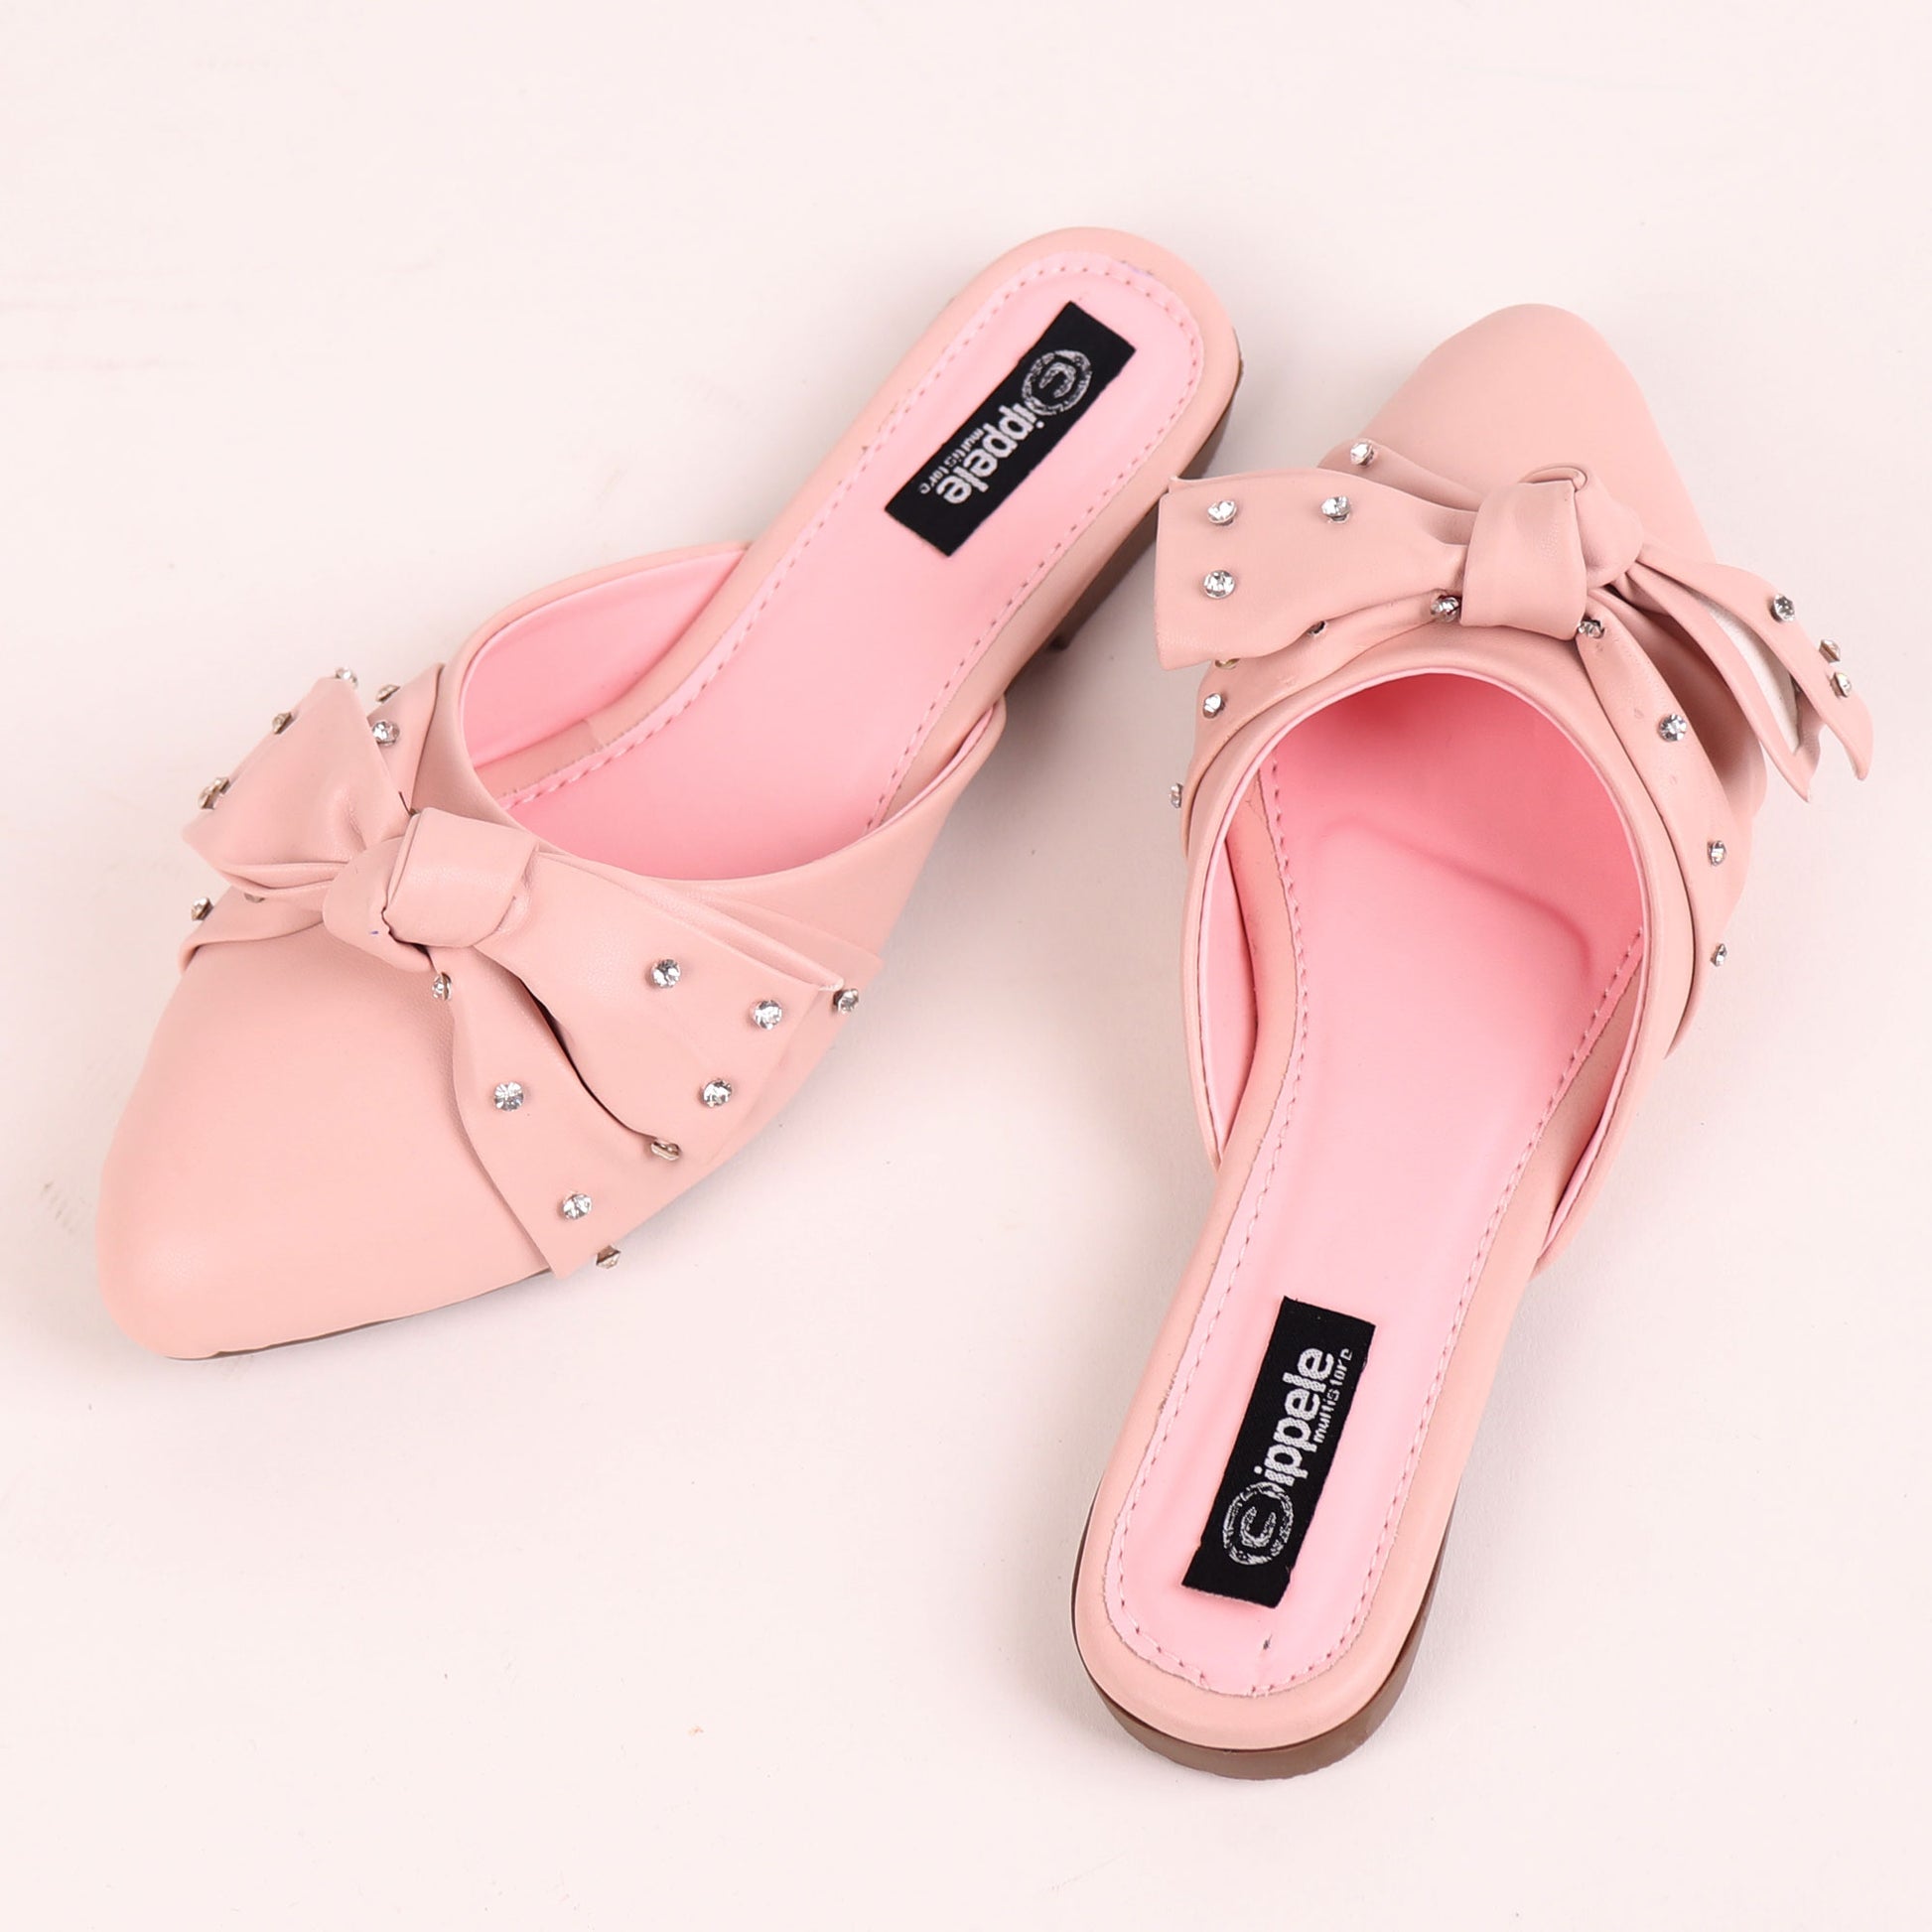 Foot Wear,The Kitten Bow Flats in Pink - Cippele Multi Store